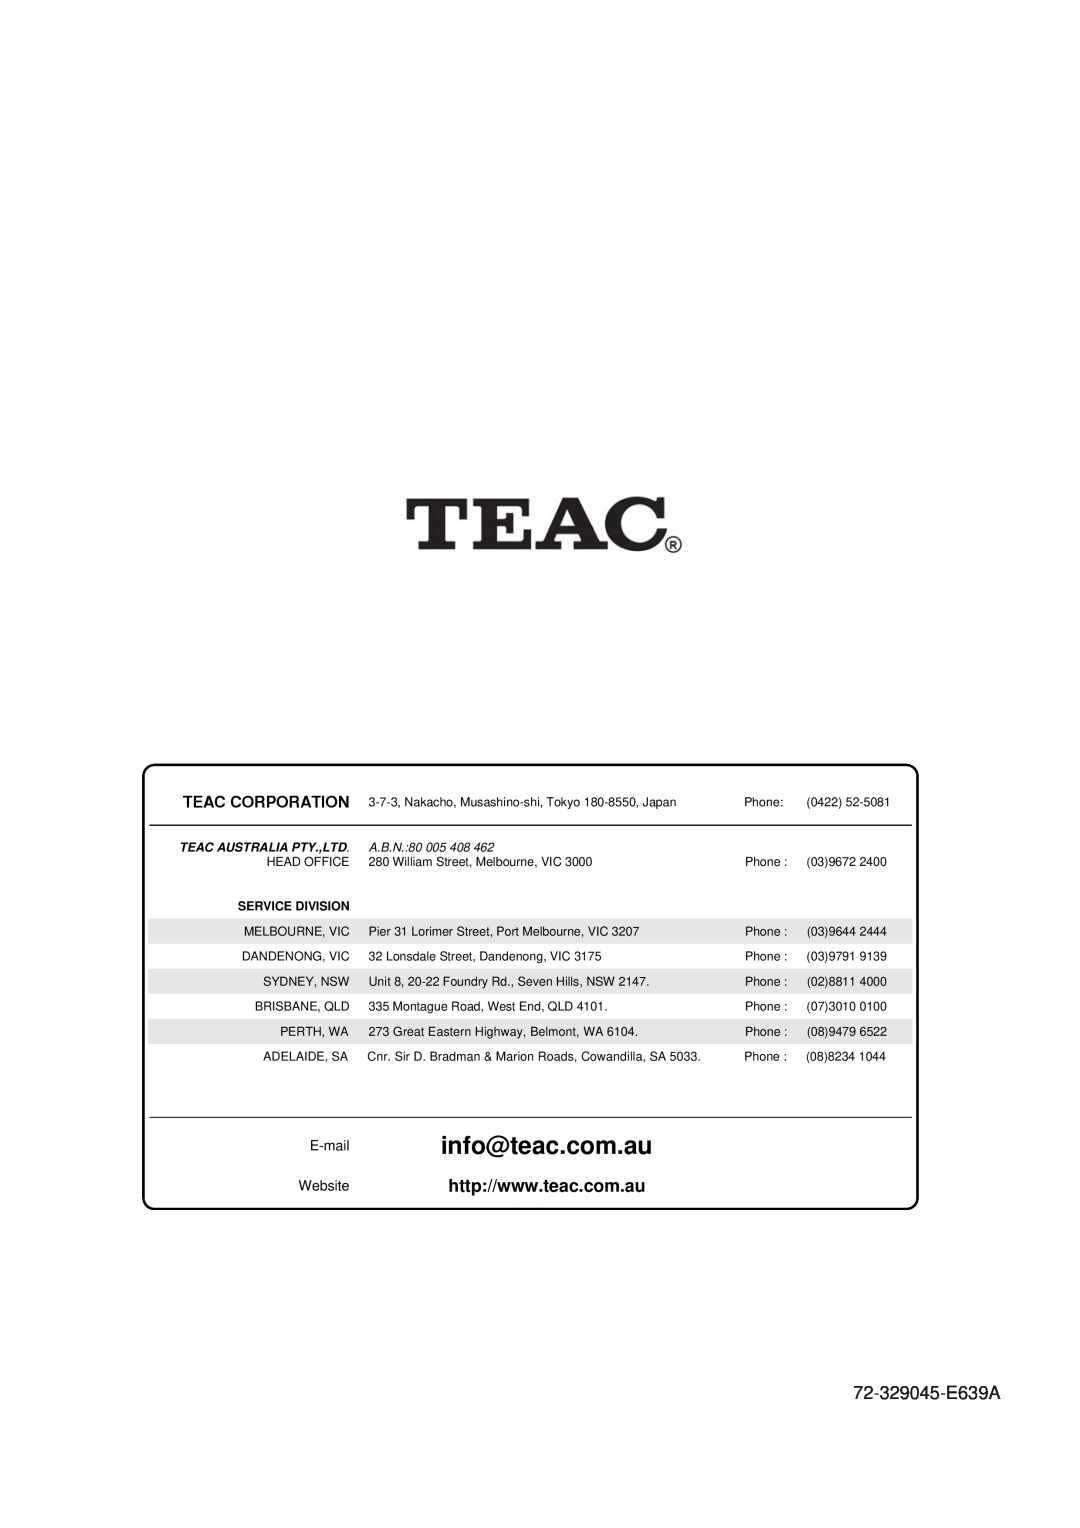 Teac CT-W32ID owner manual E-mailinfo@teac.com.au, 72-329045-E639A, Teac Corporation, A.B.N.80 005 408, Service Division 